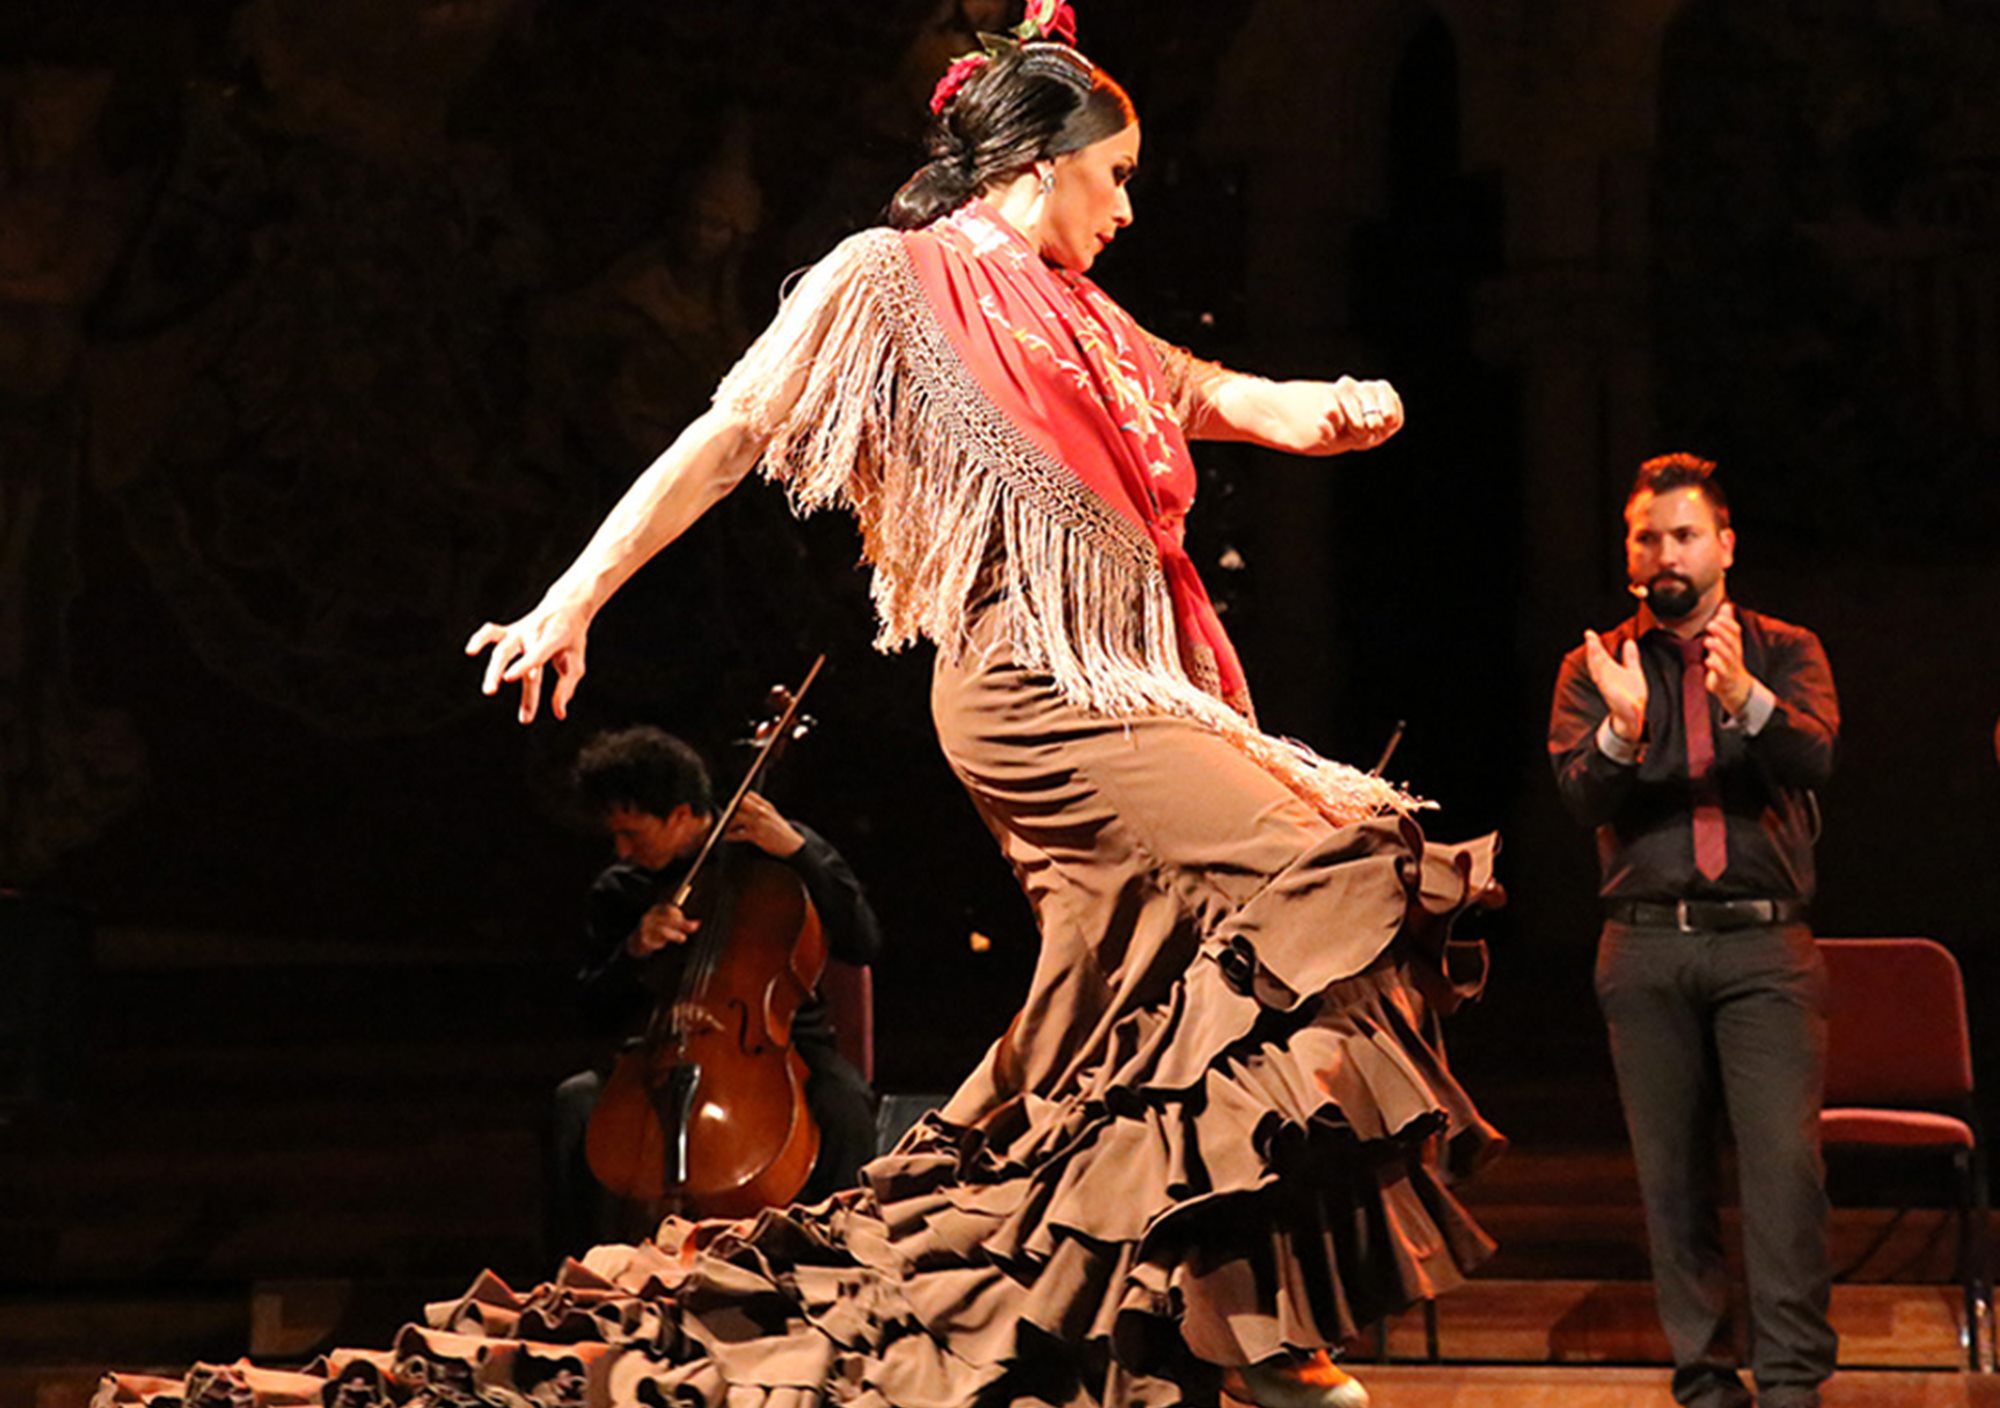 buchen online tickets karten eintrittskarten Fahrkarte Oper und Flamenco Show in Palau de la Música Catalana barcelona